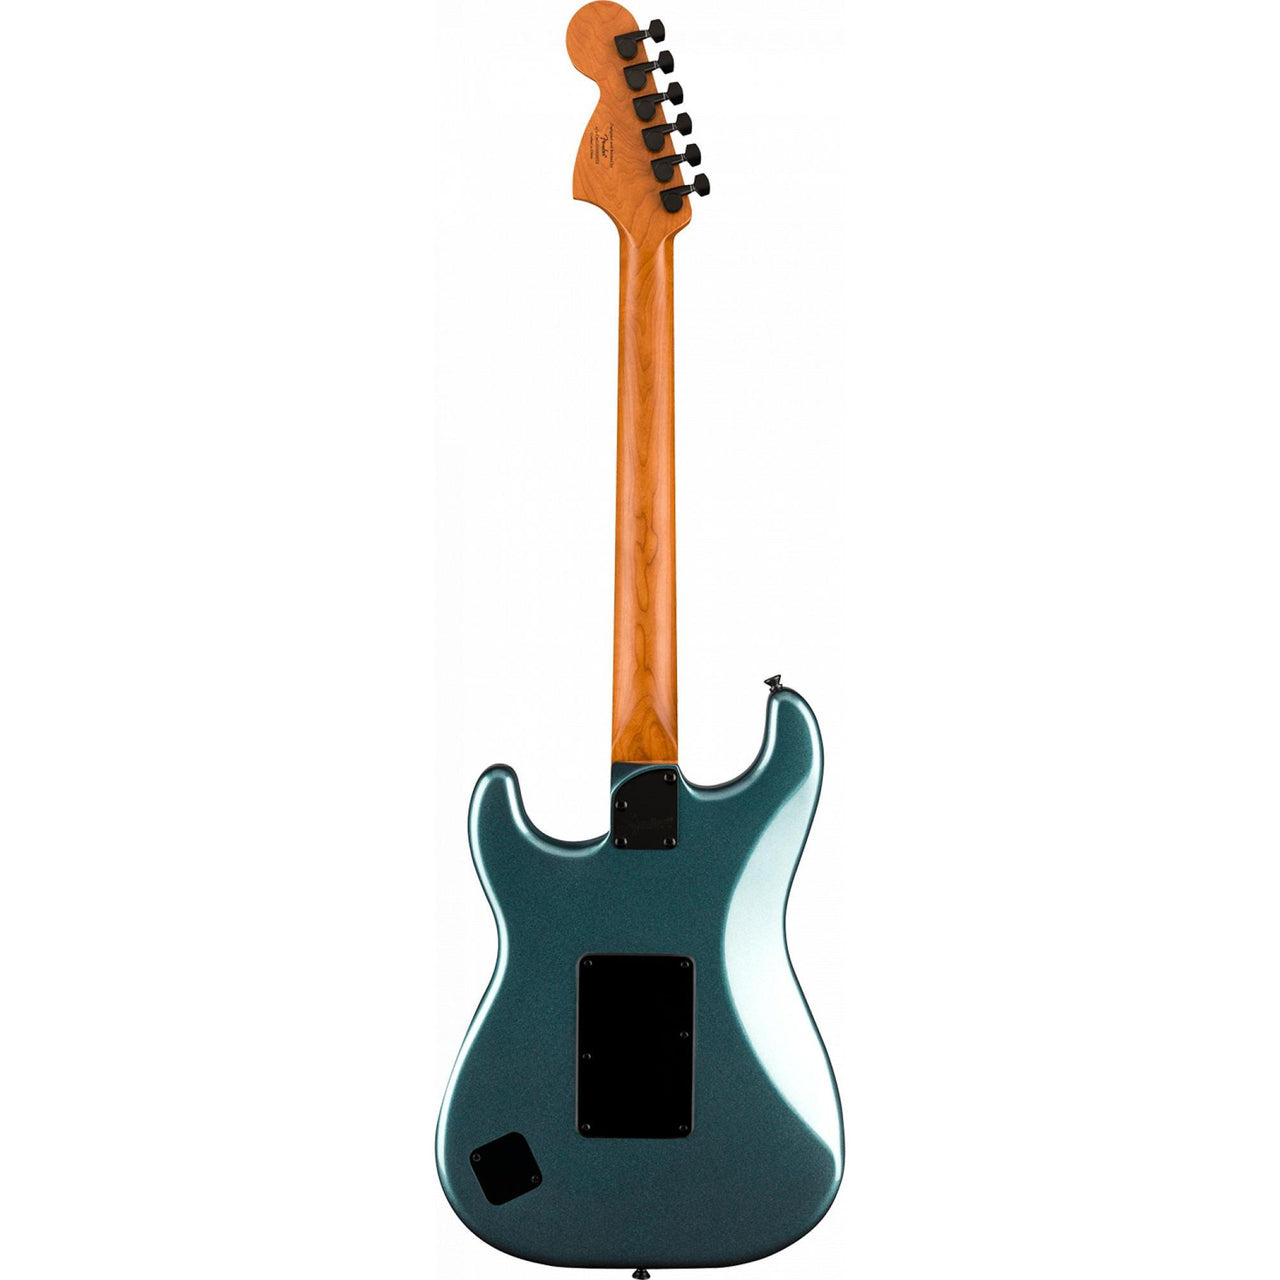 Guitarra Fender Contemporary Stratocaster Hh Fr Electrica Bronce Metálico 0370240568